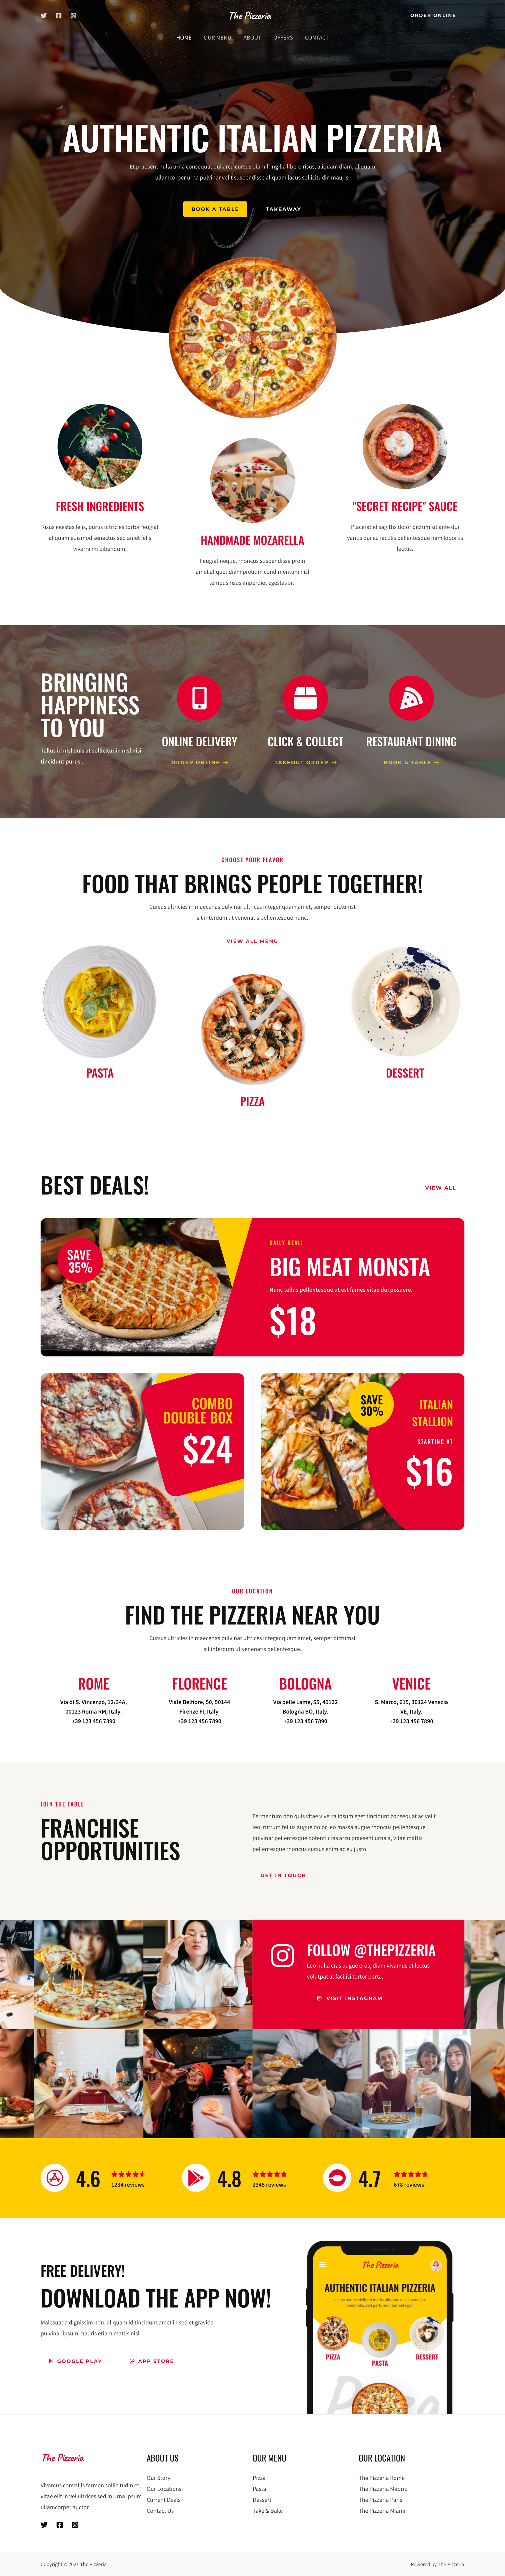 branDiT Pizza site